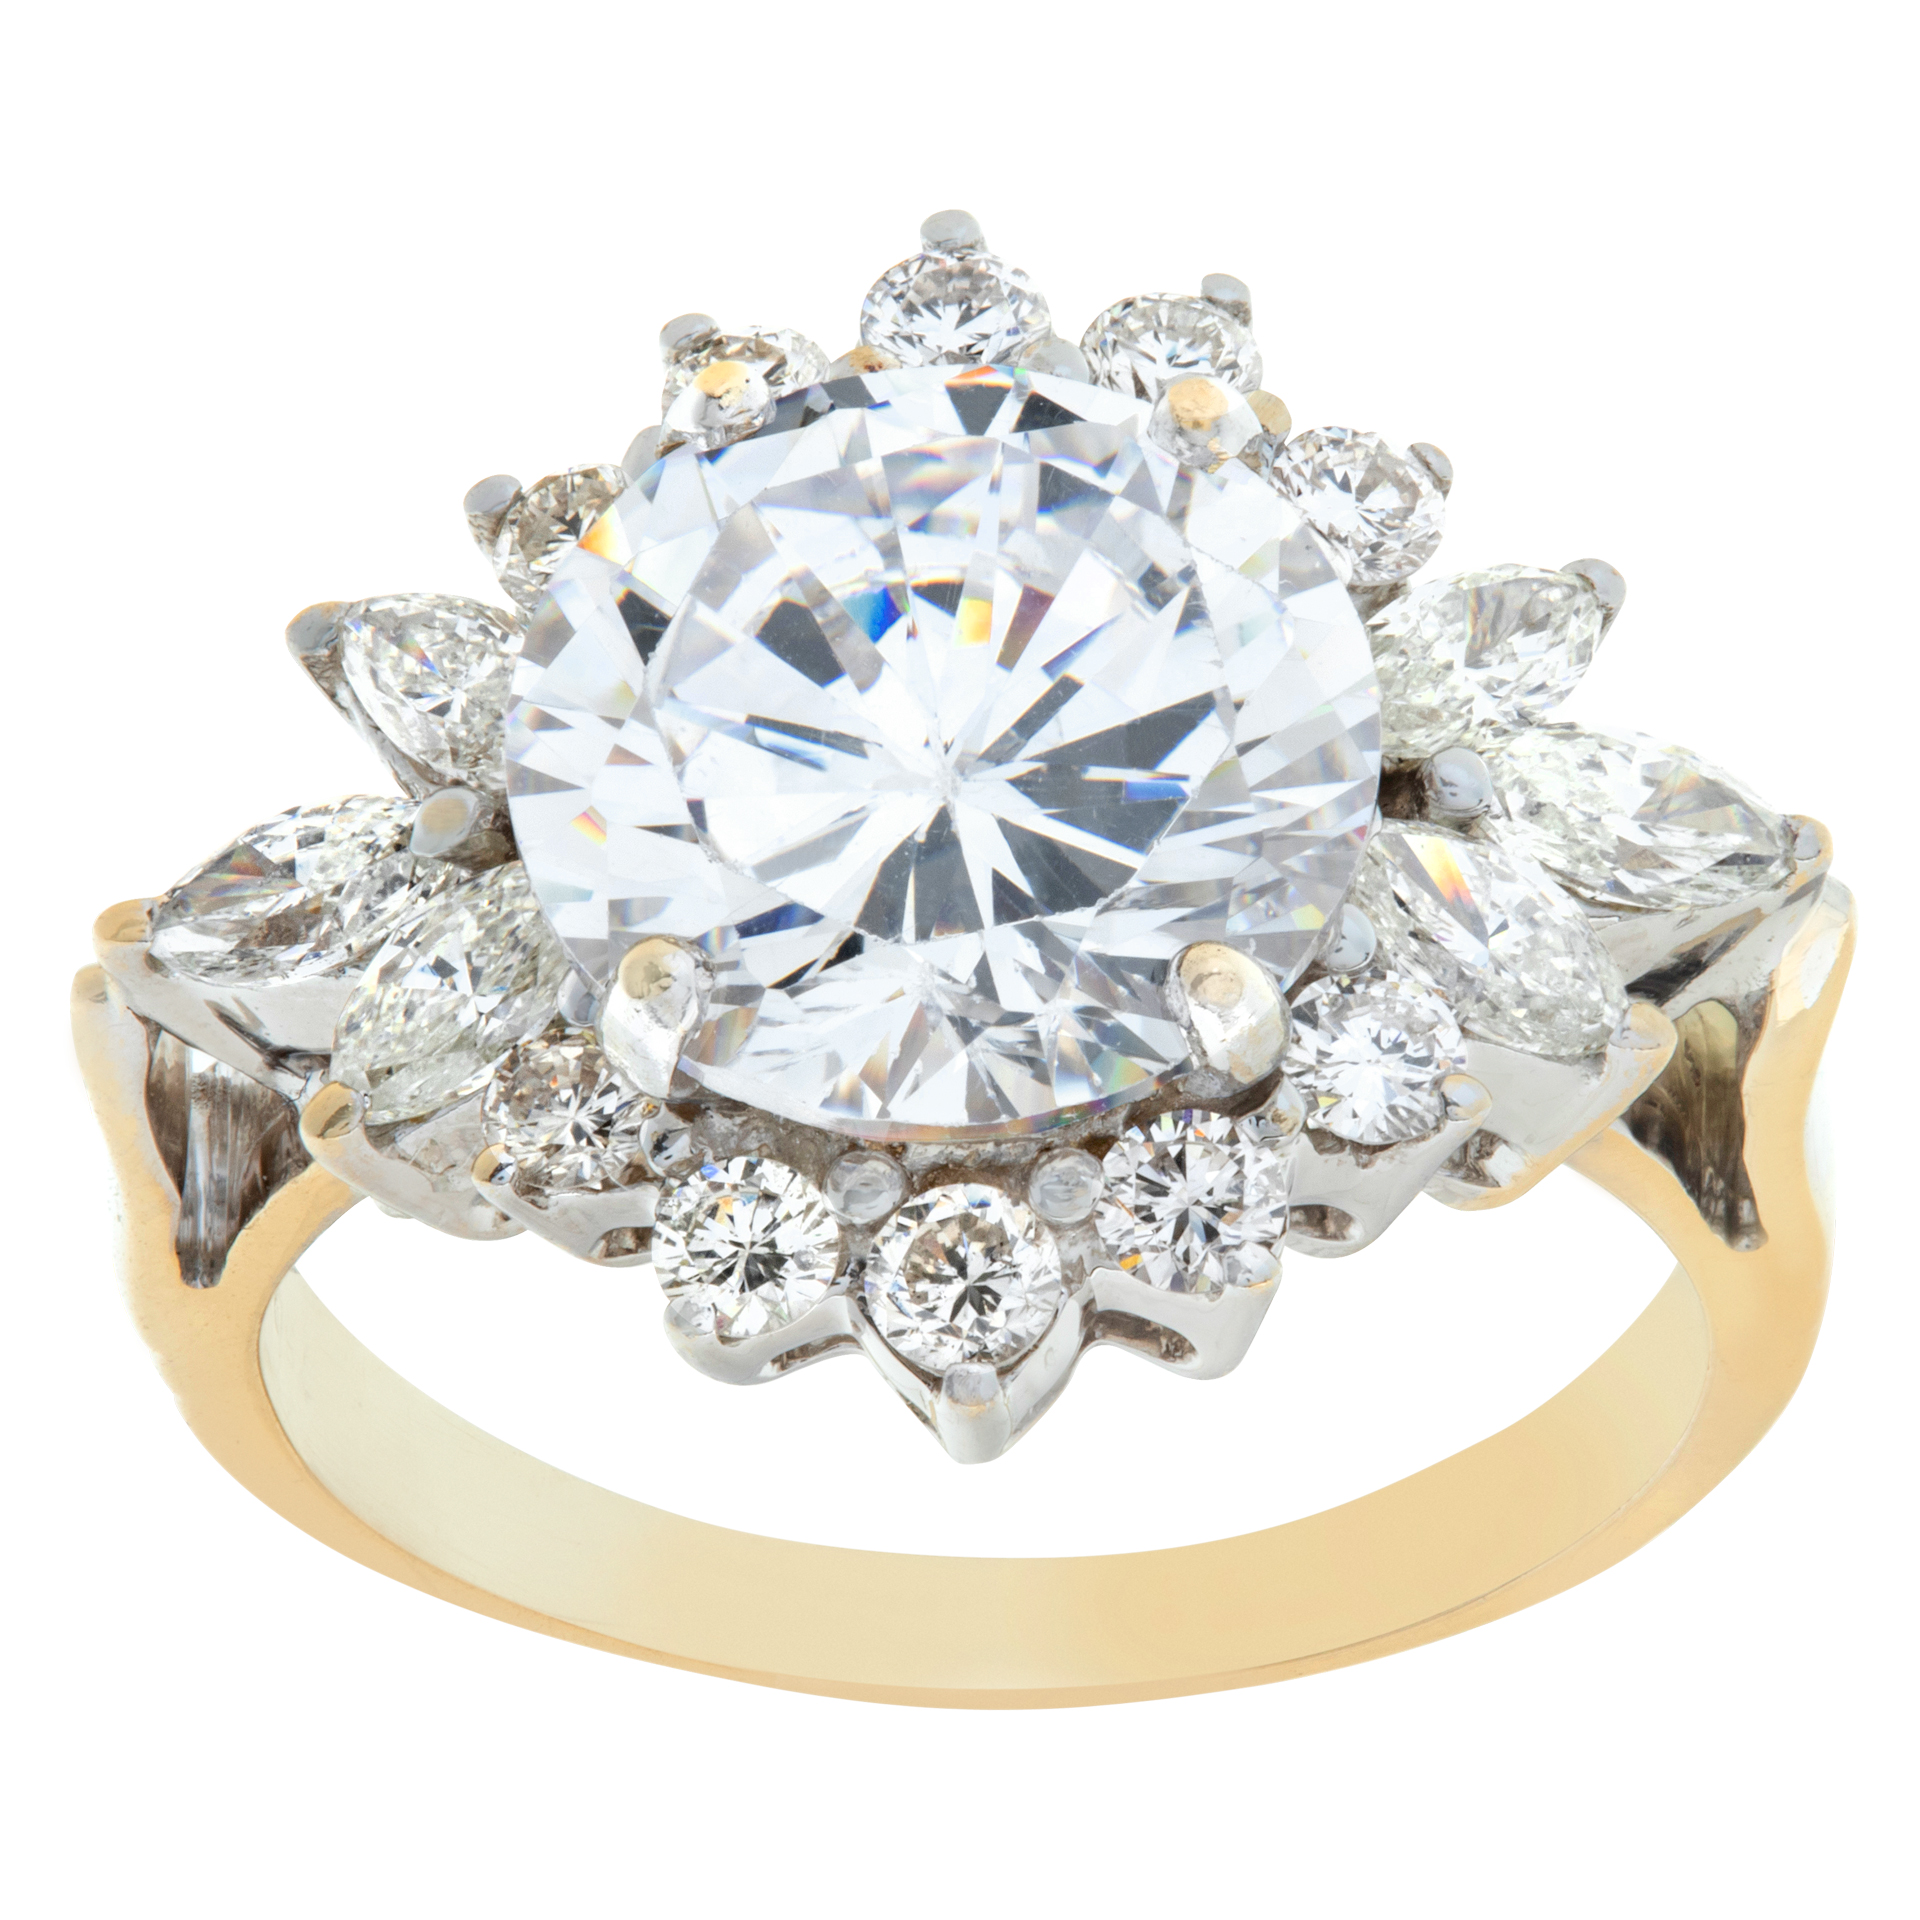 GIA certified 3.04 carat round brilliant cut diamond- D color- SI2 clarity. image 1